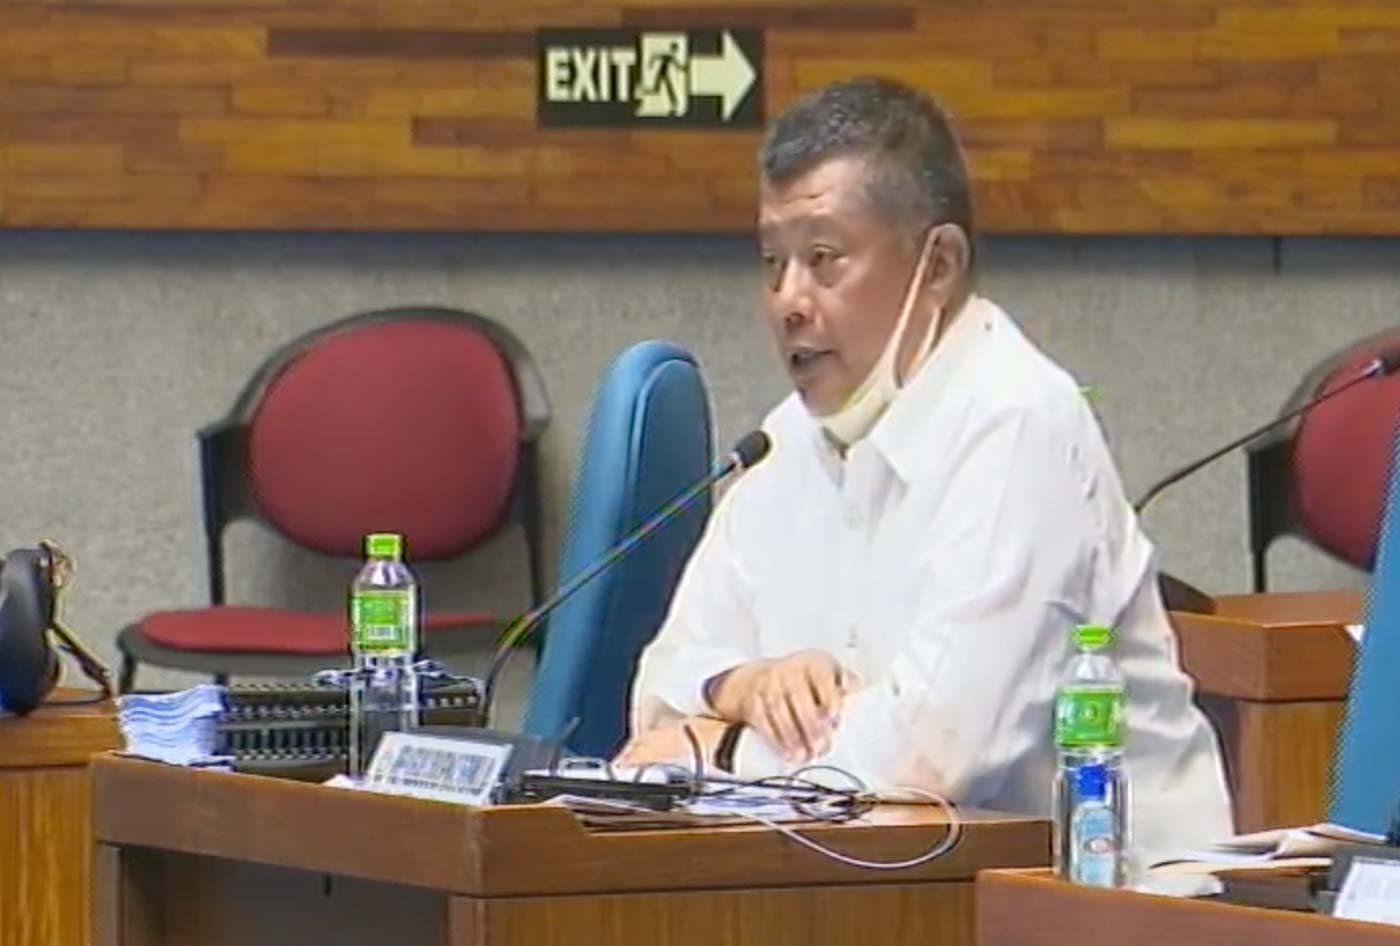 House panels to seek NBI probe into ABS-CBN’s ‘deception’ in hearings